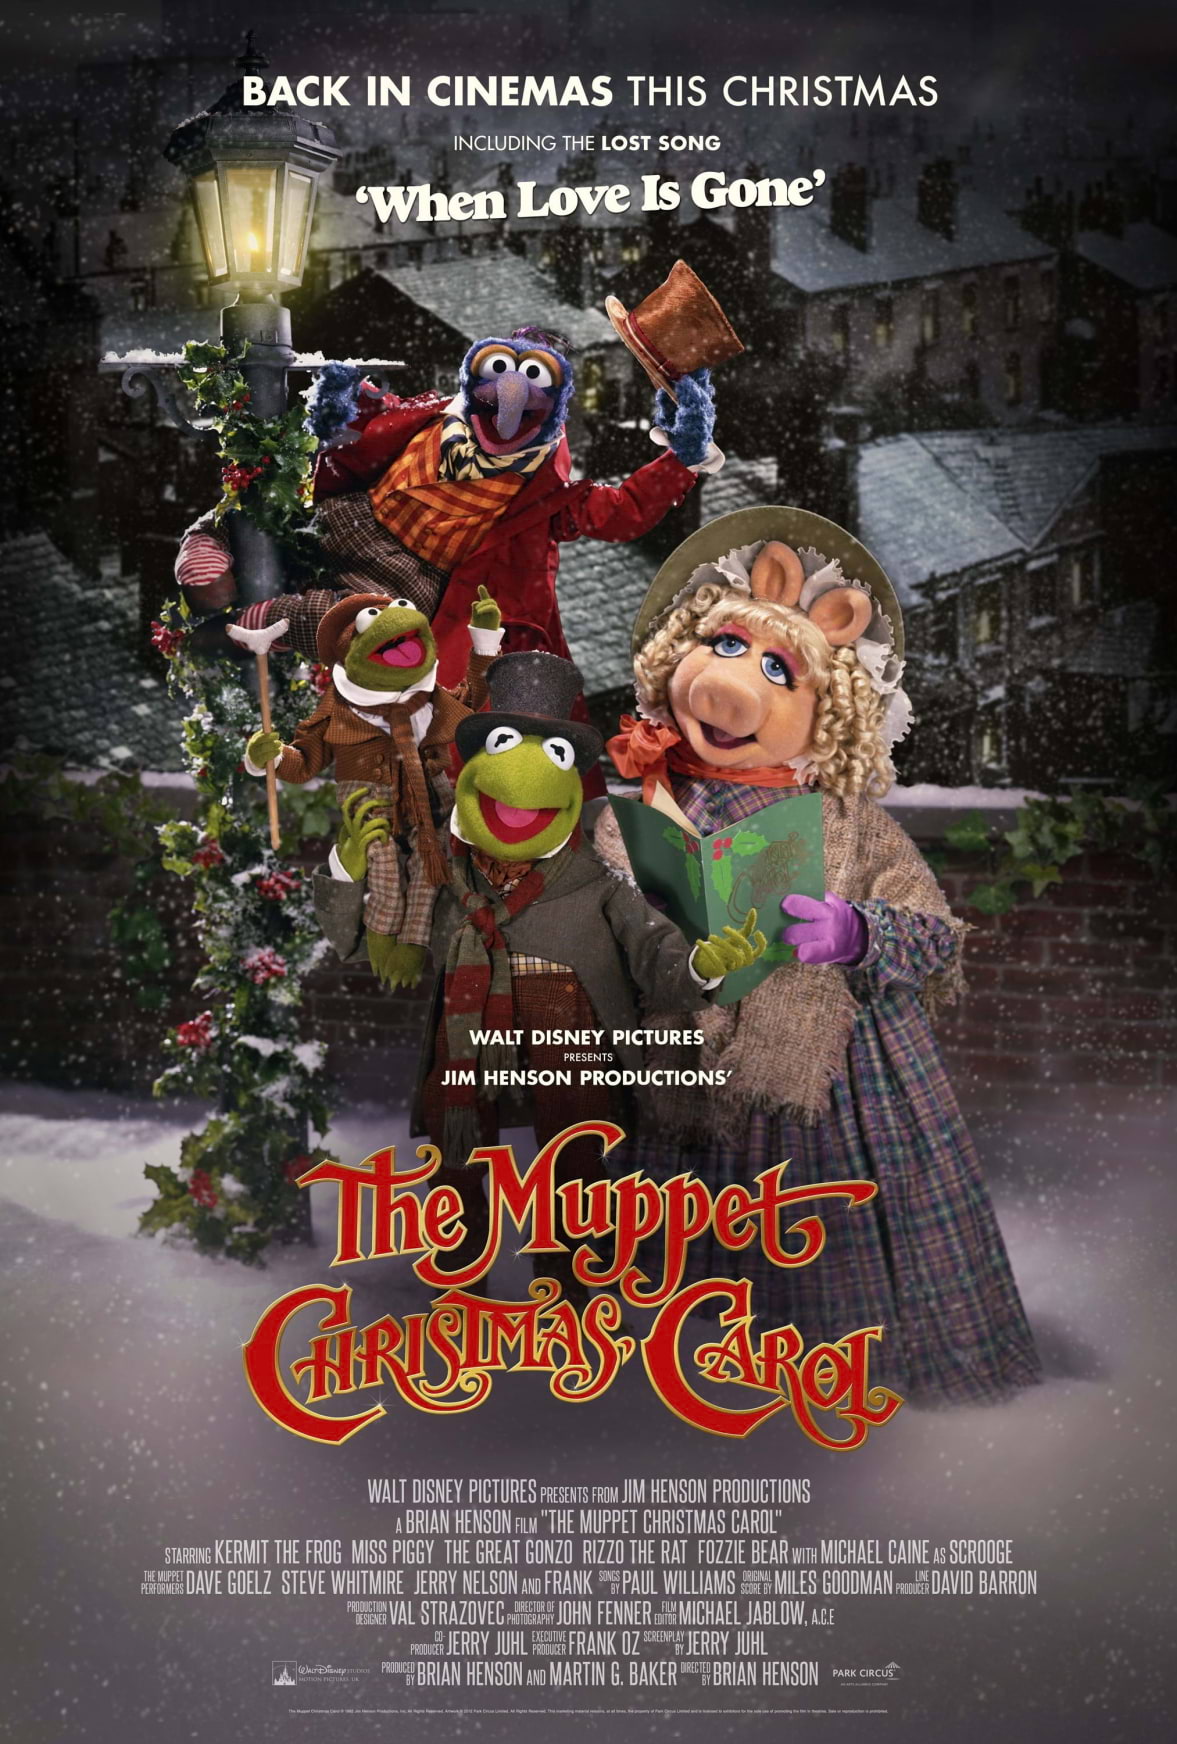 Singalong to The Muppet Christmas Carol at The Prince Charles Cinema